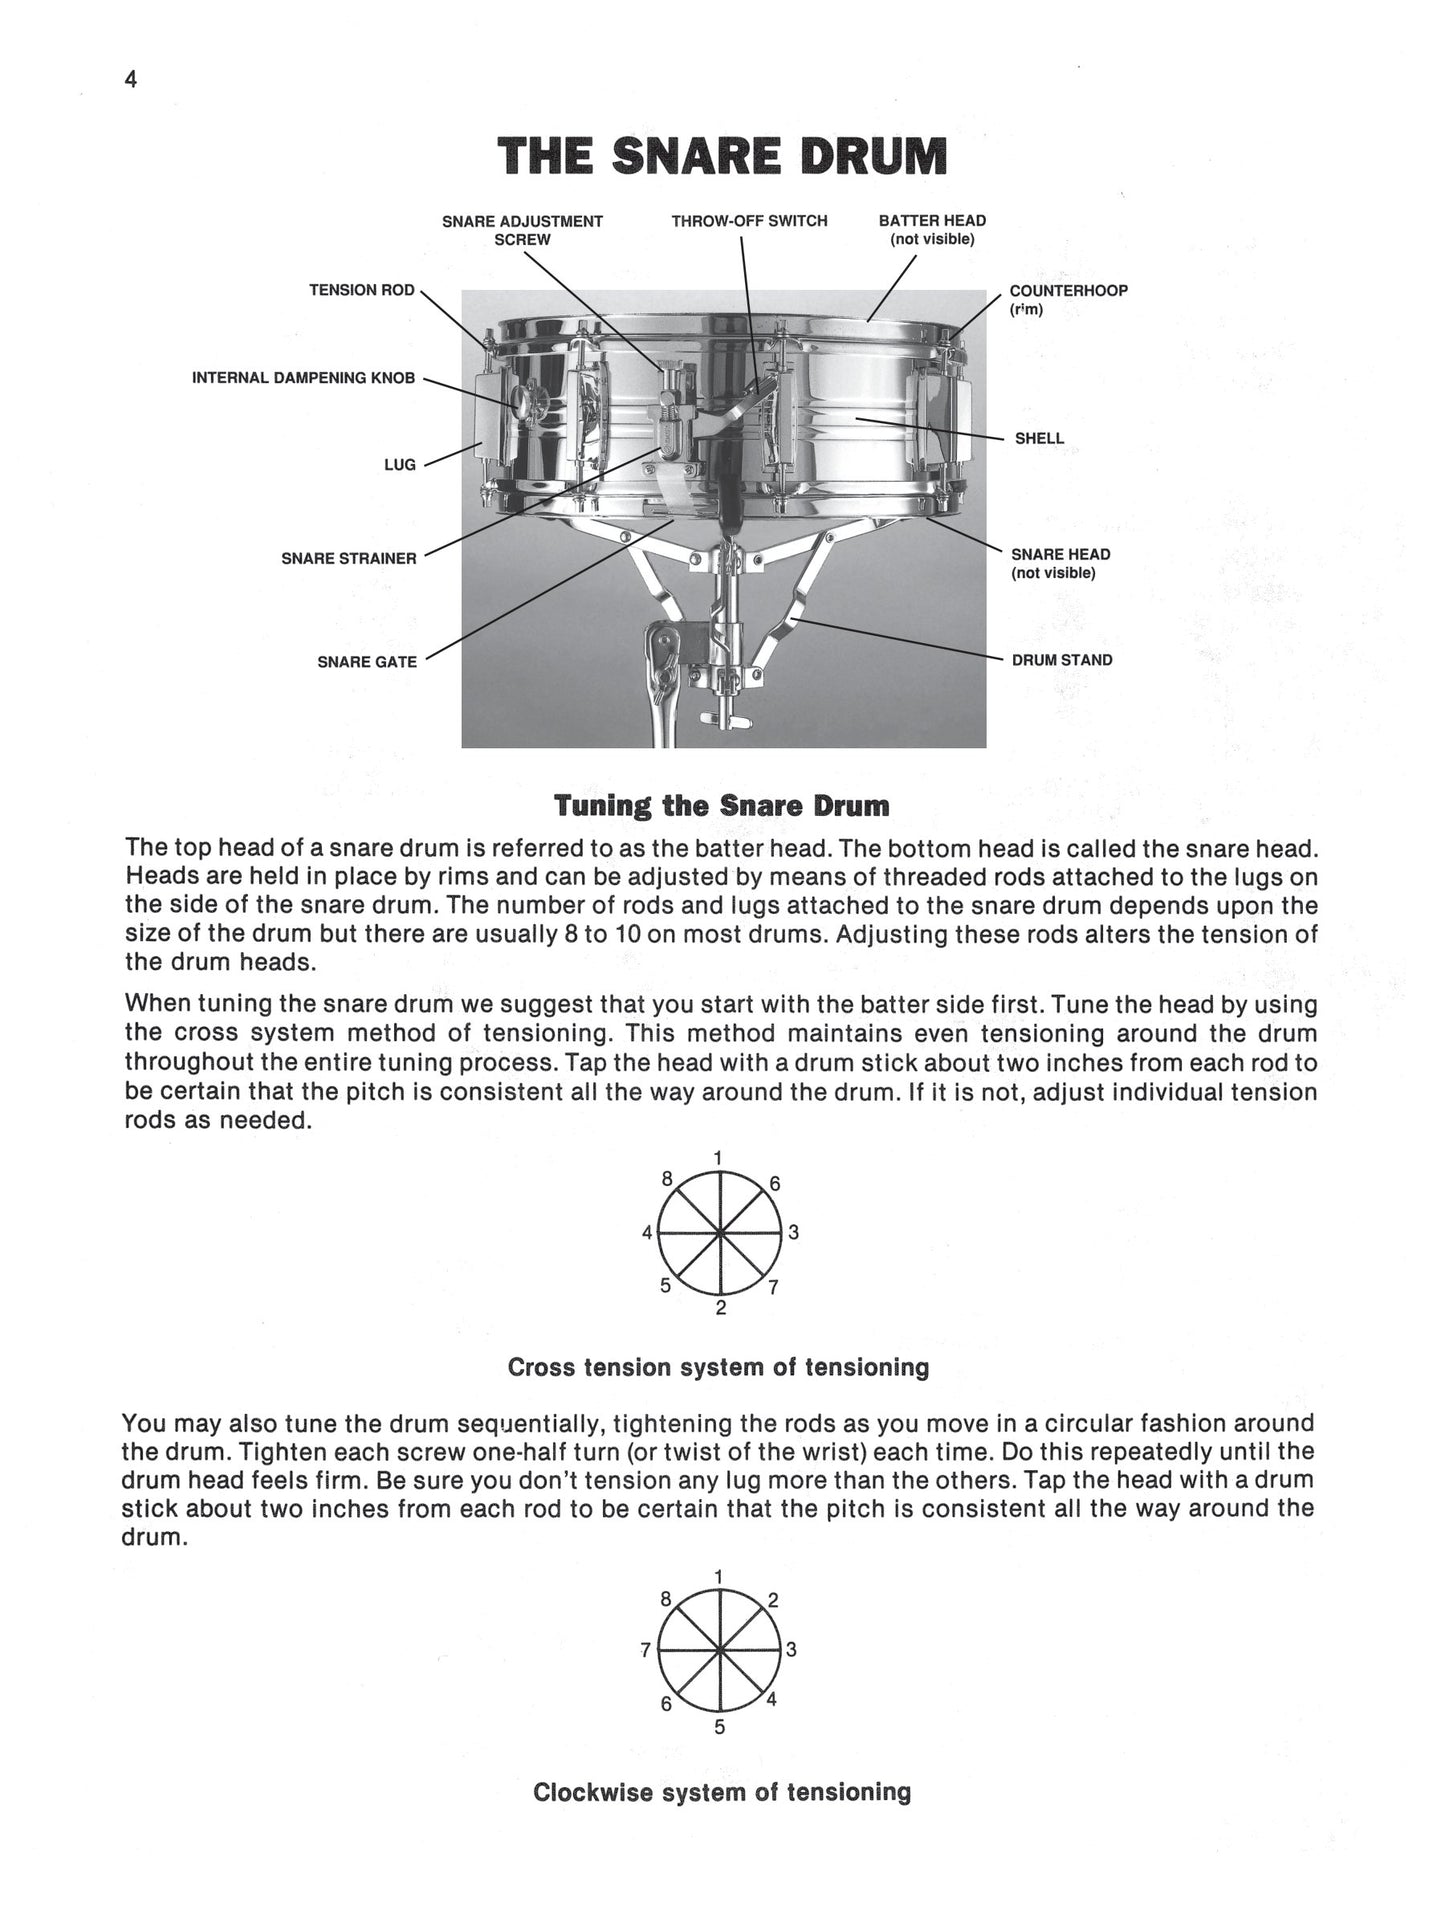 Alfred's Drum Method - Snare Drum Book 1 (Book/Olm)